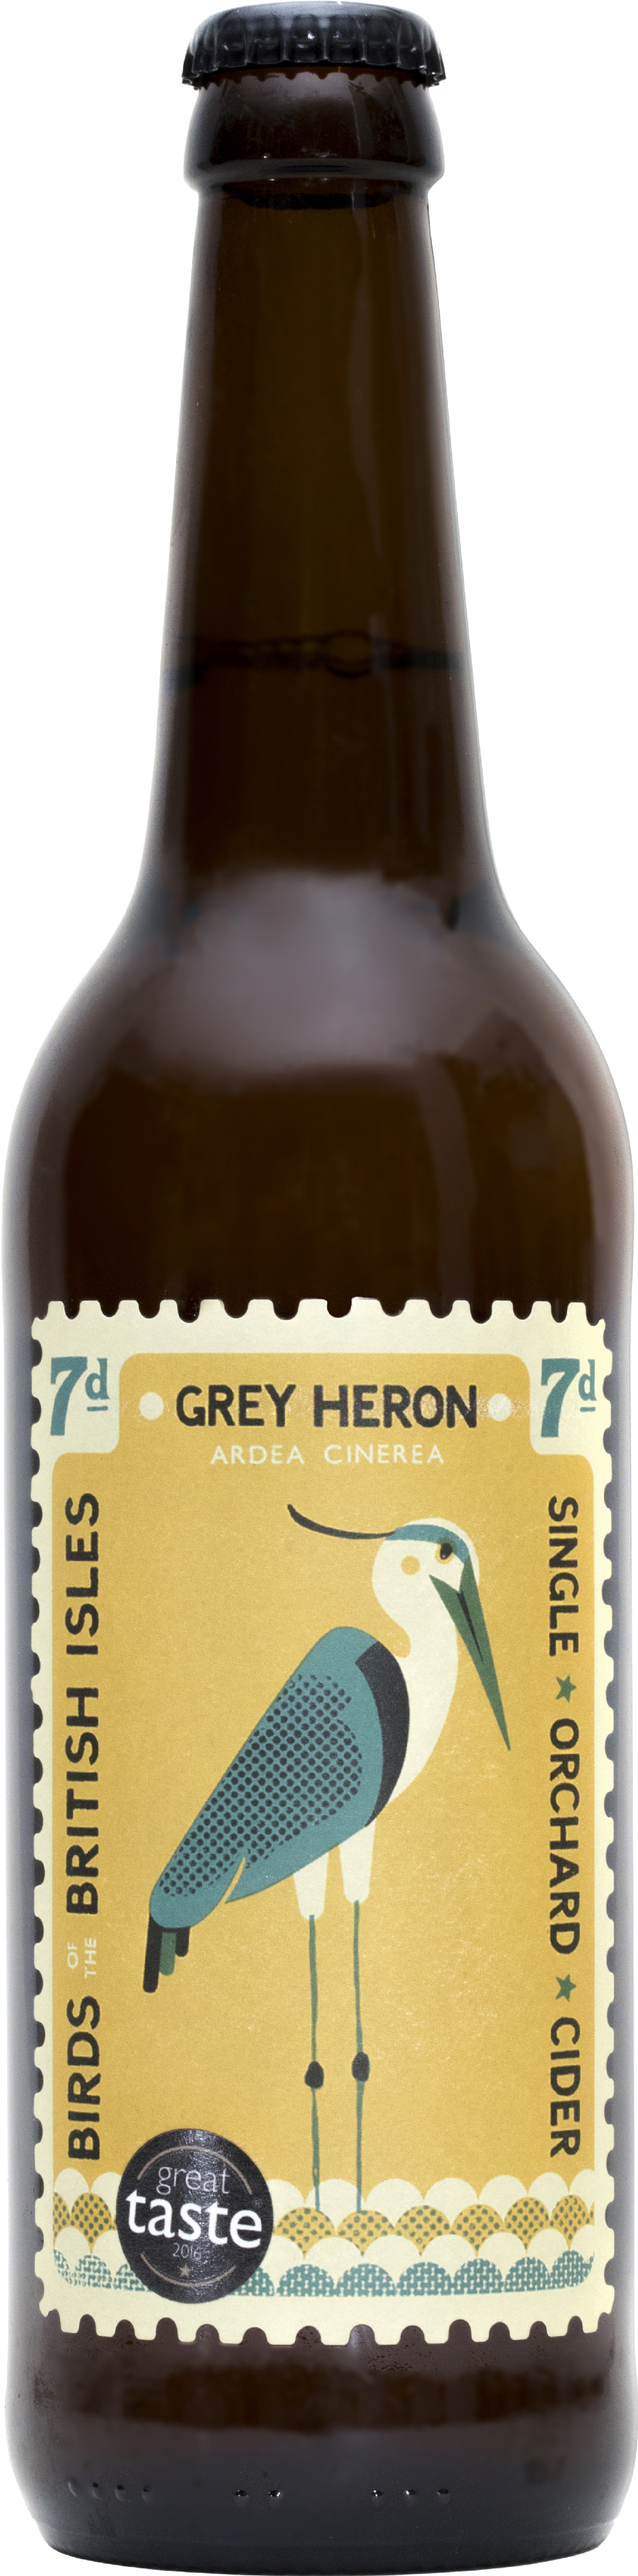 PERRY'S Farmhouse Cider - Grey Heron 500ml 4.3% ABV